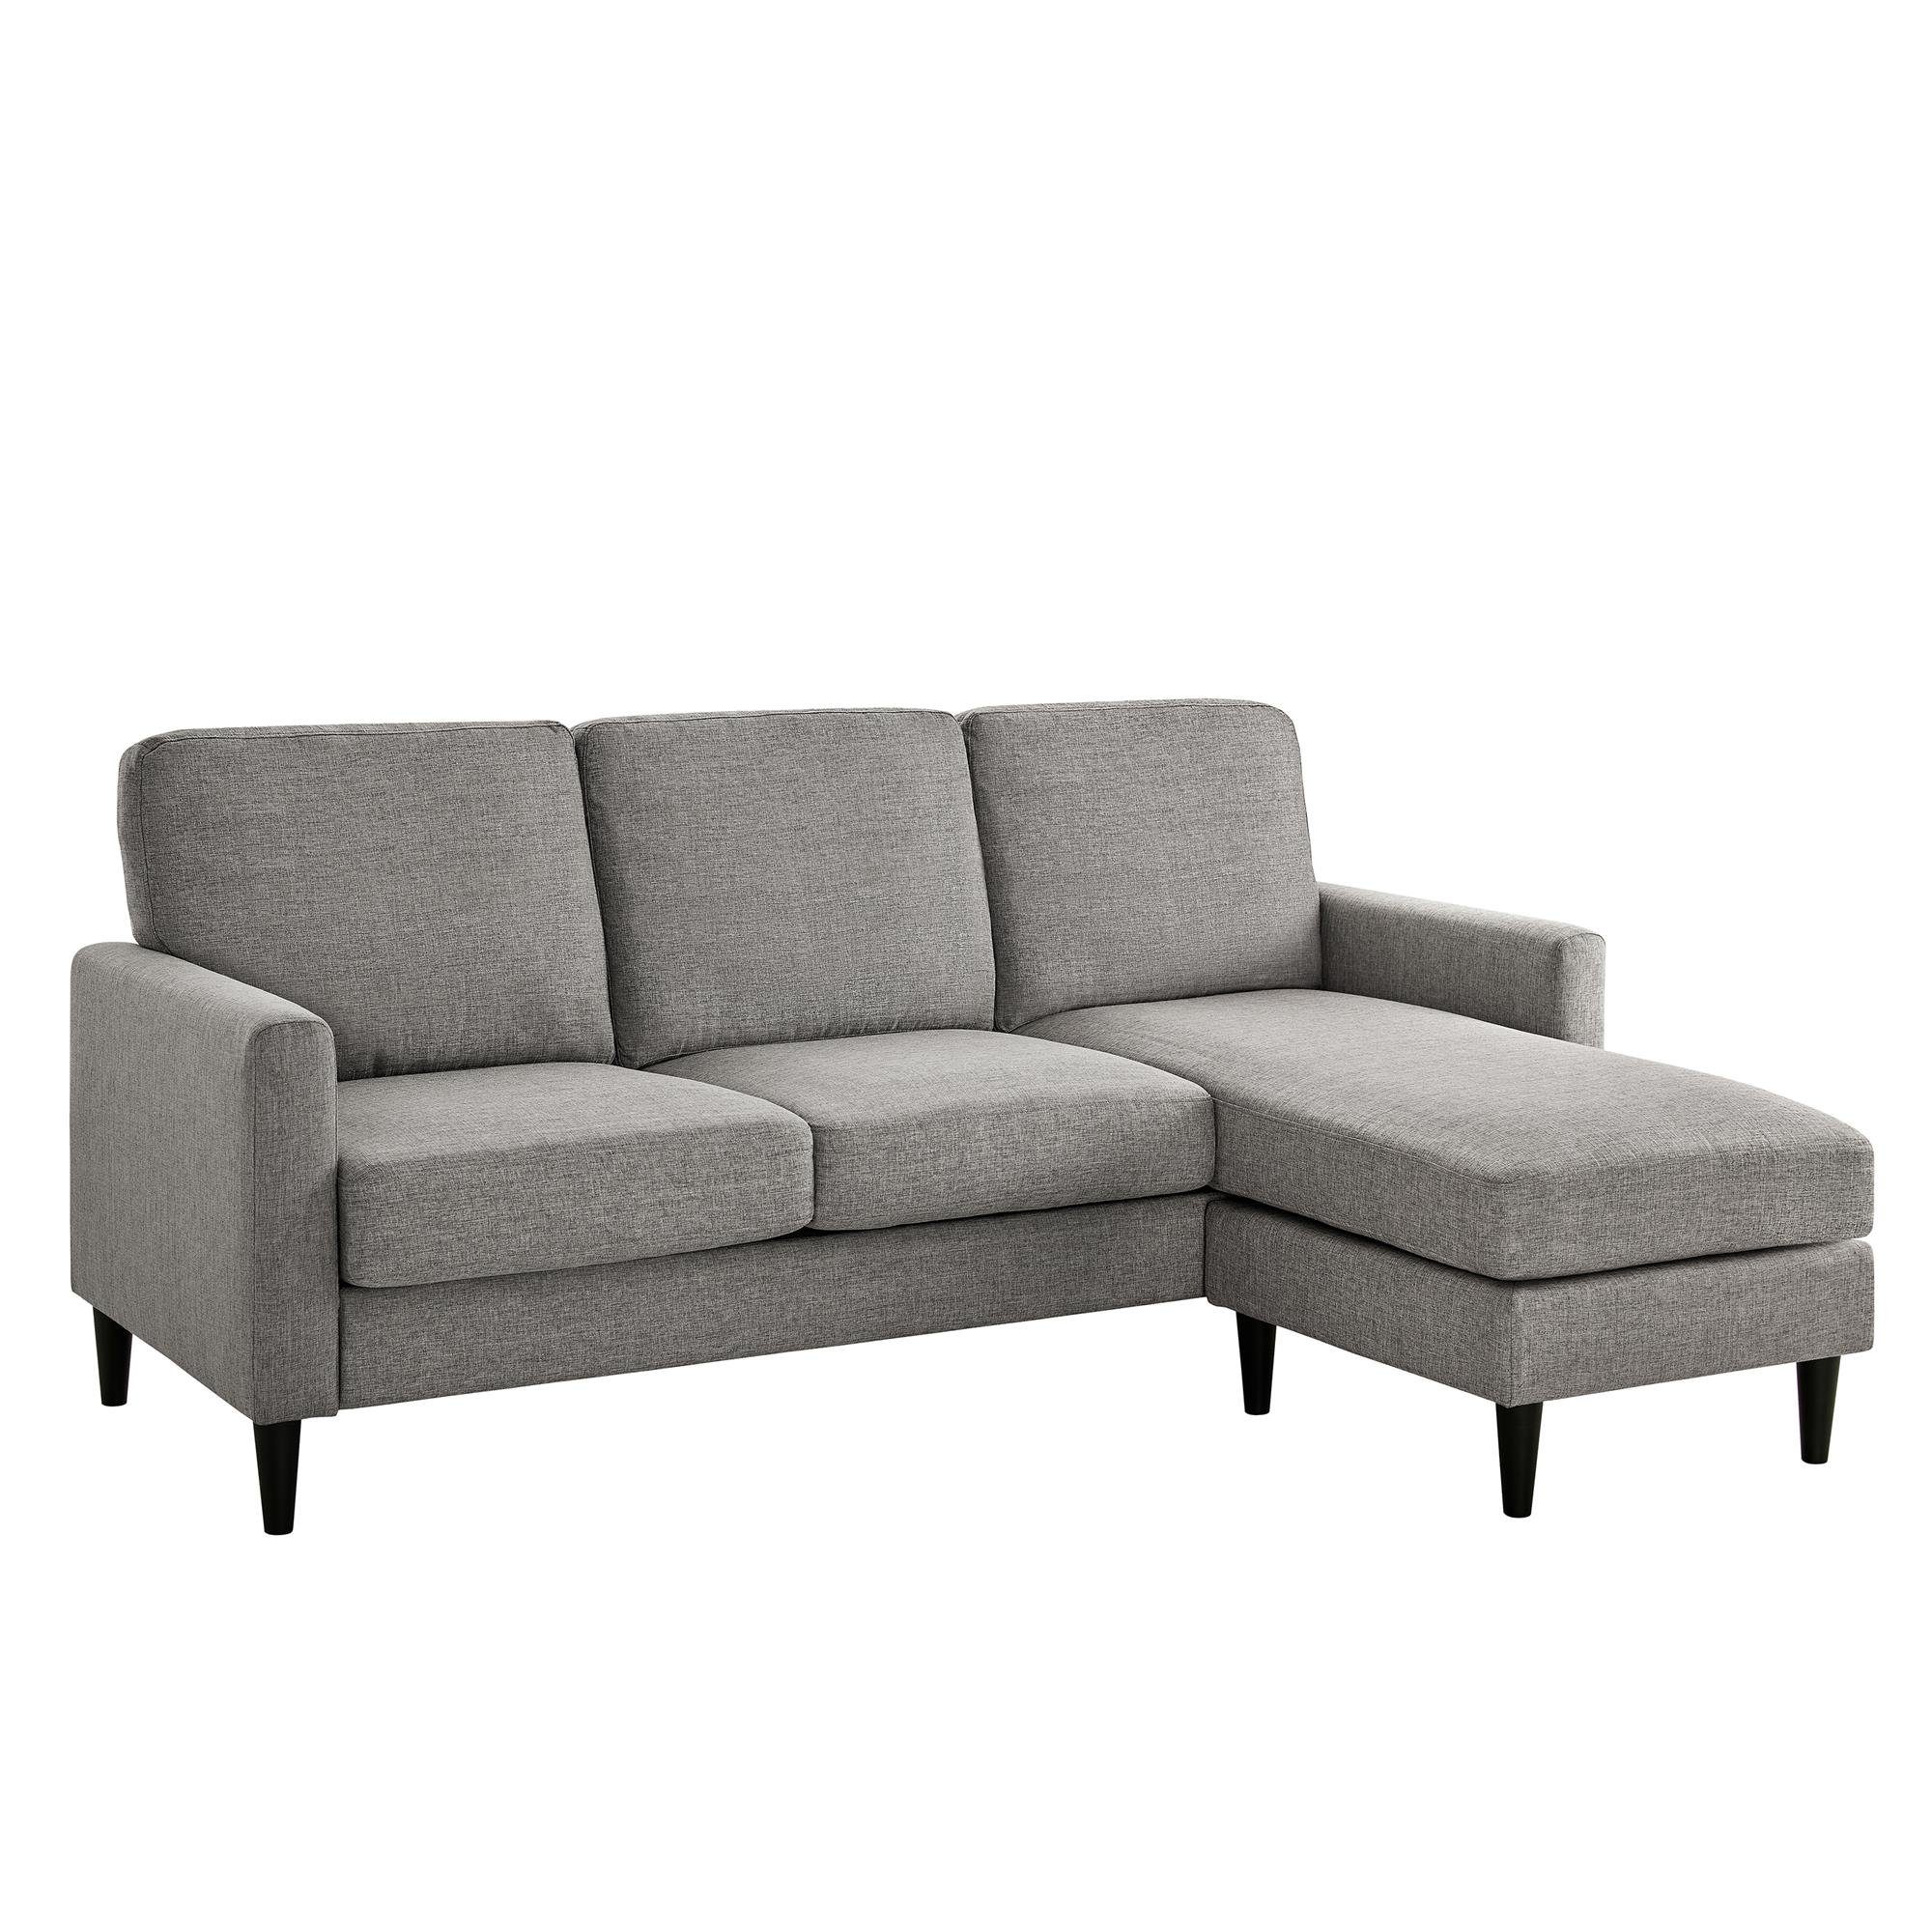 loft24 Ecksofa Kaci, 3-Sitzer Couch mit Recamiere, Stoffbezug, Breite ca. 206 cm hellgrau